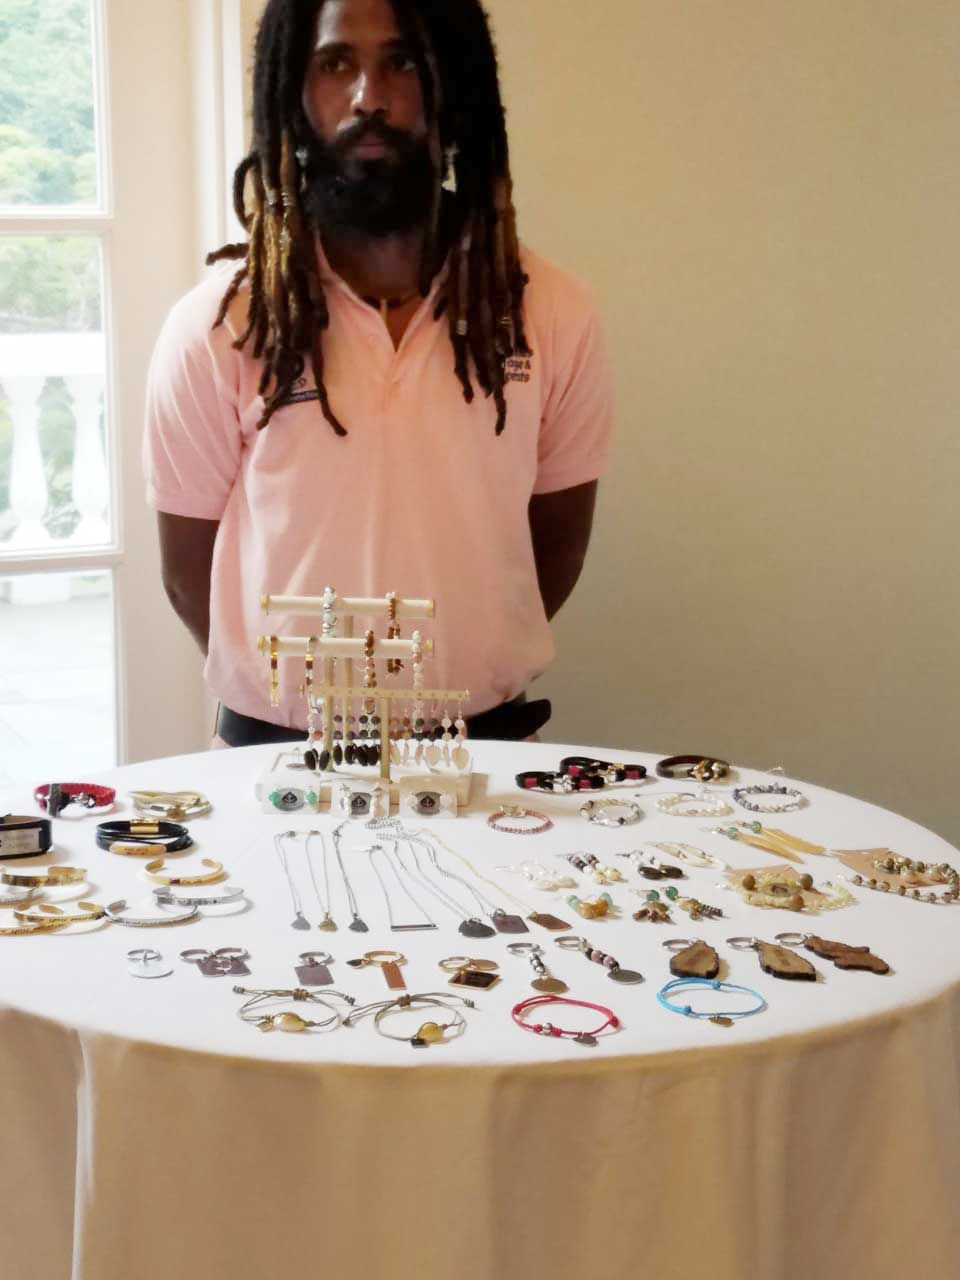 Adam Cadette displays his handmade jewelry craft …